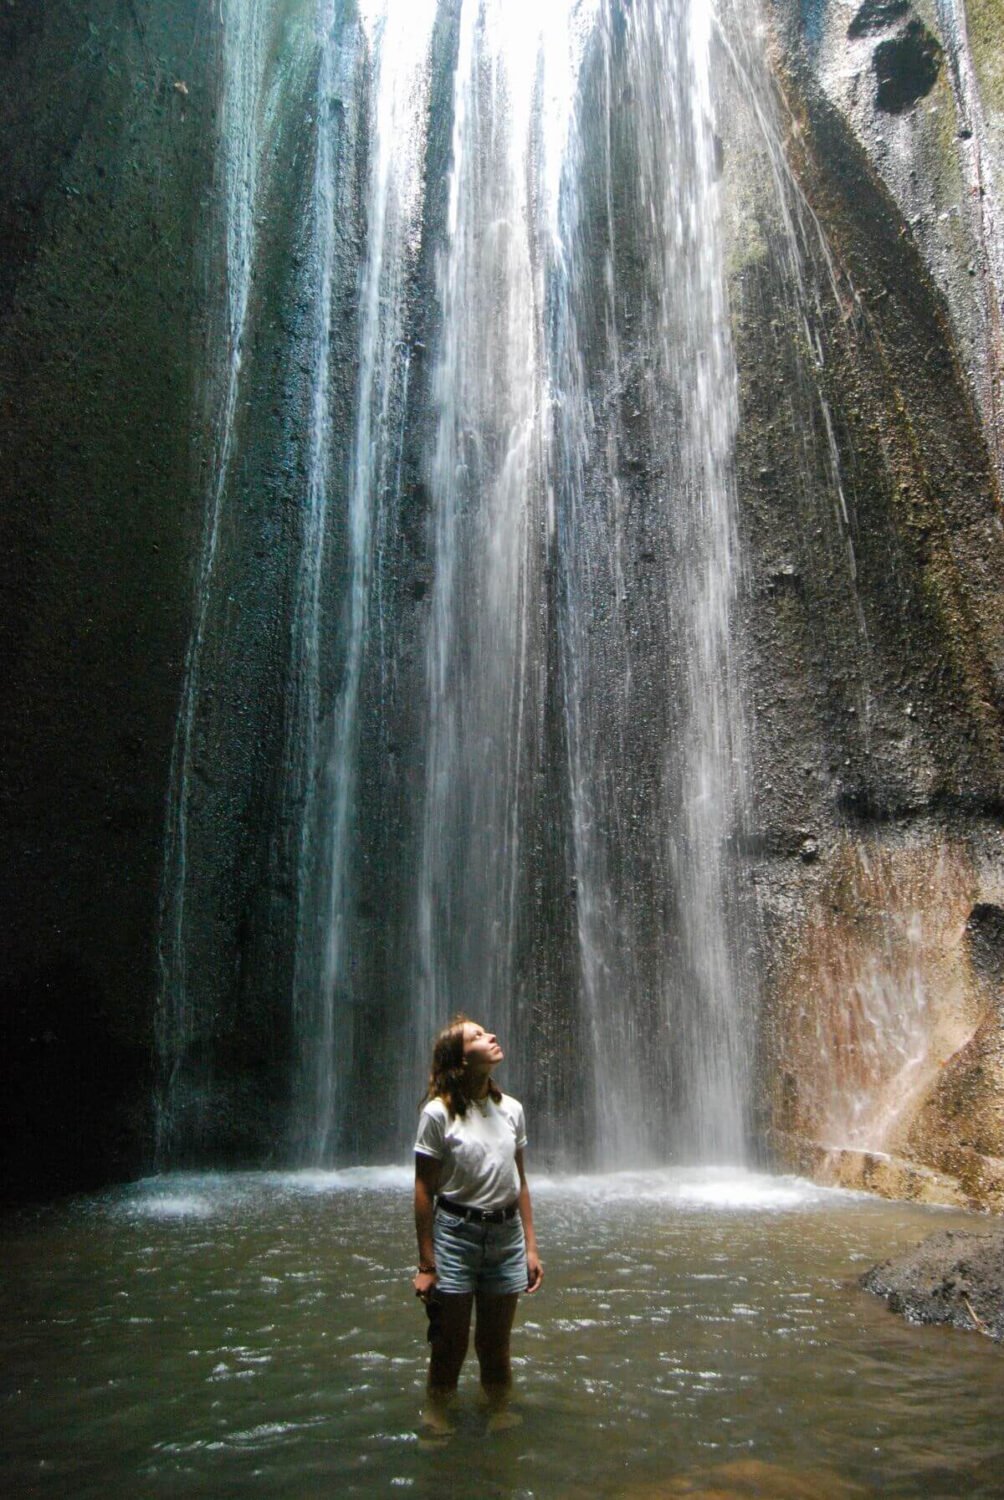 Tourist exploring Tukad Cepung Waterfall in Bali